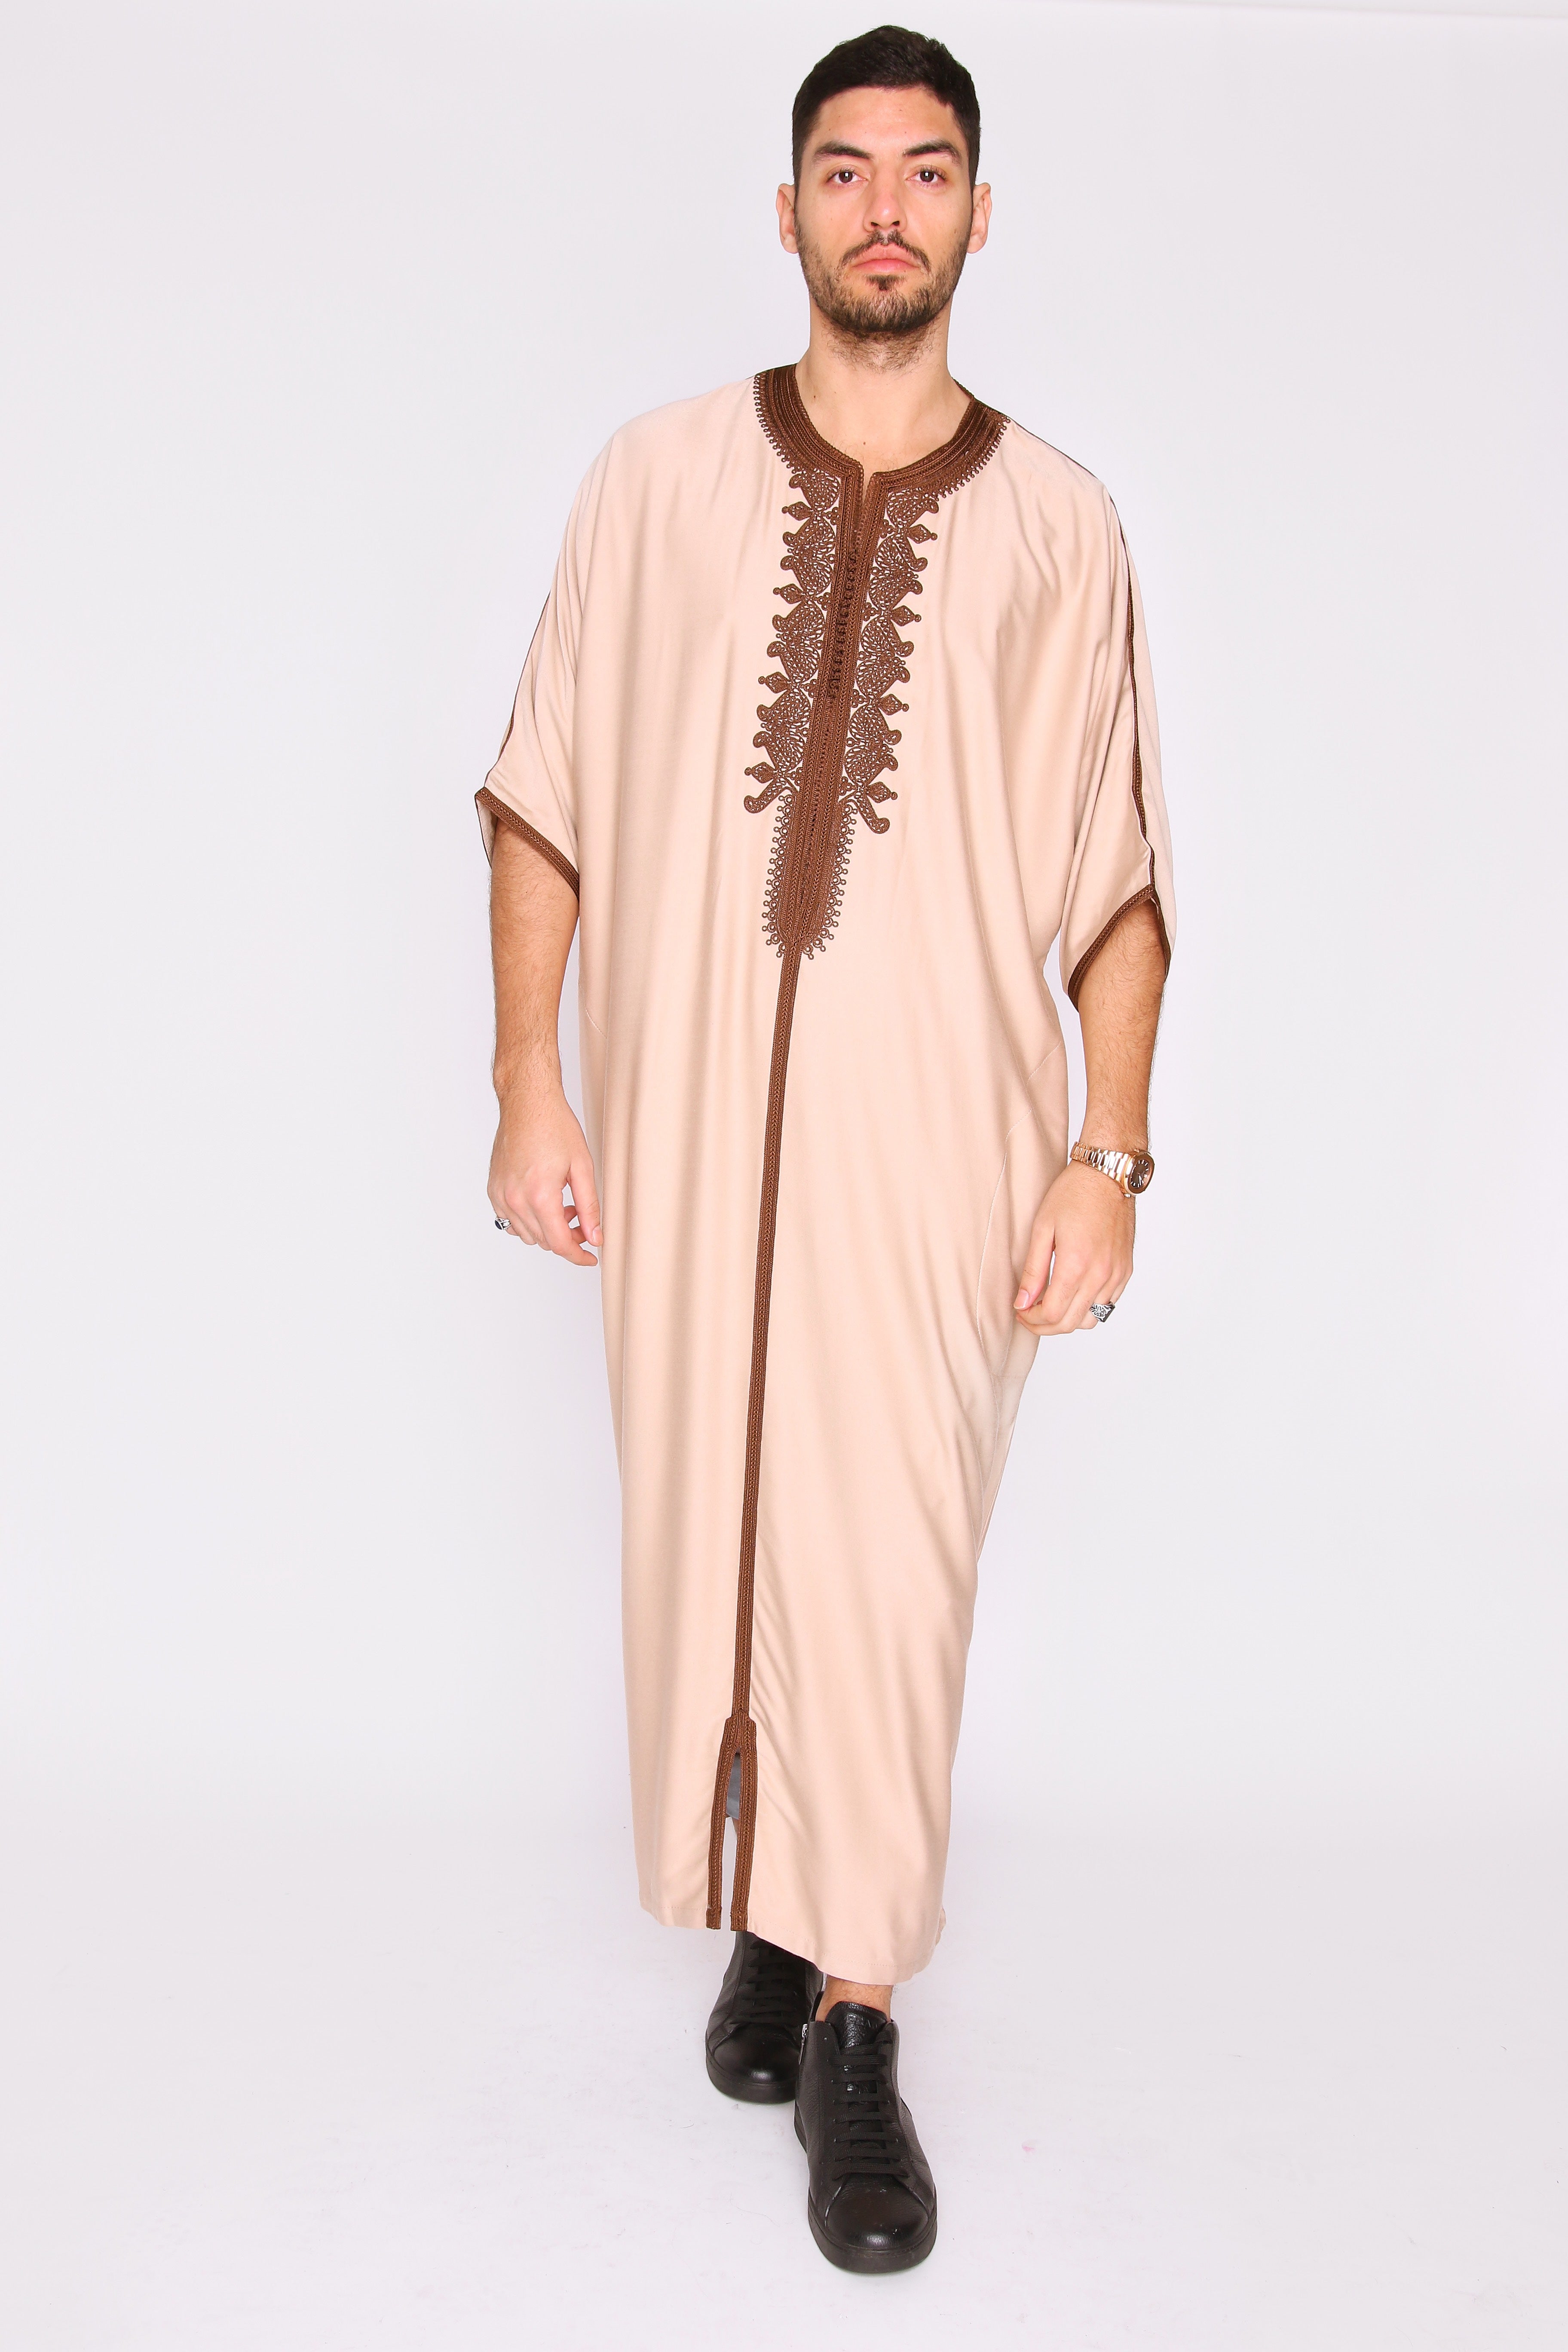 Gandoura Hamza Embroidered Short Sleeve Men's Long Robe Thobe in Beige